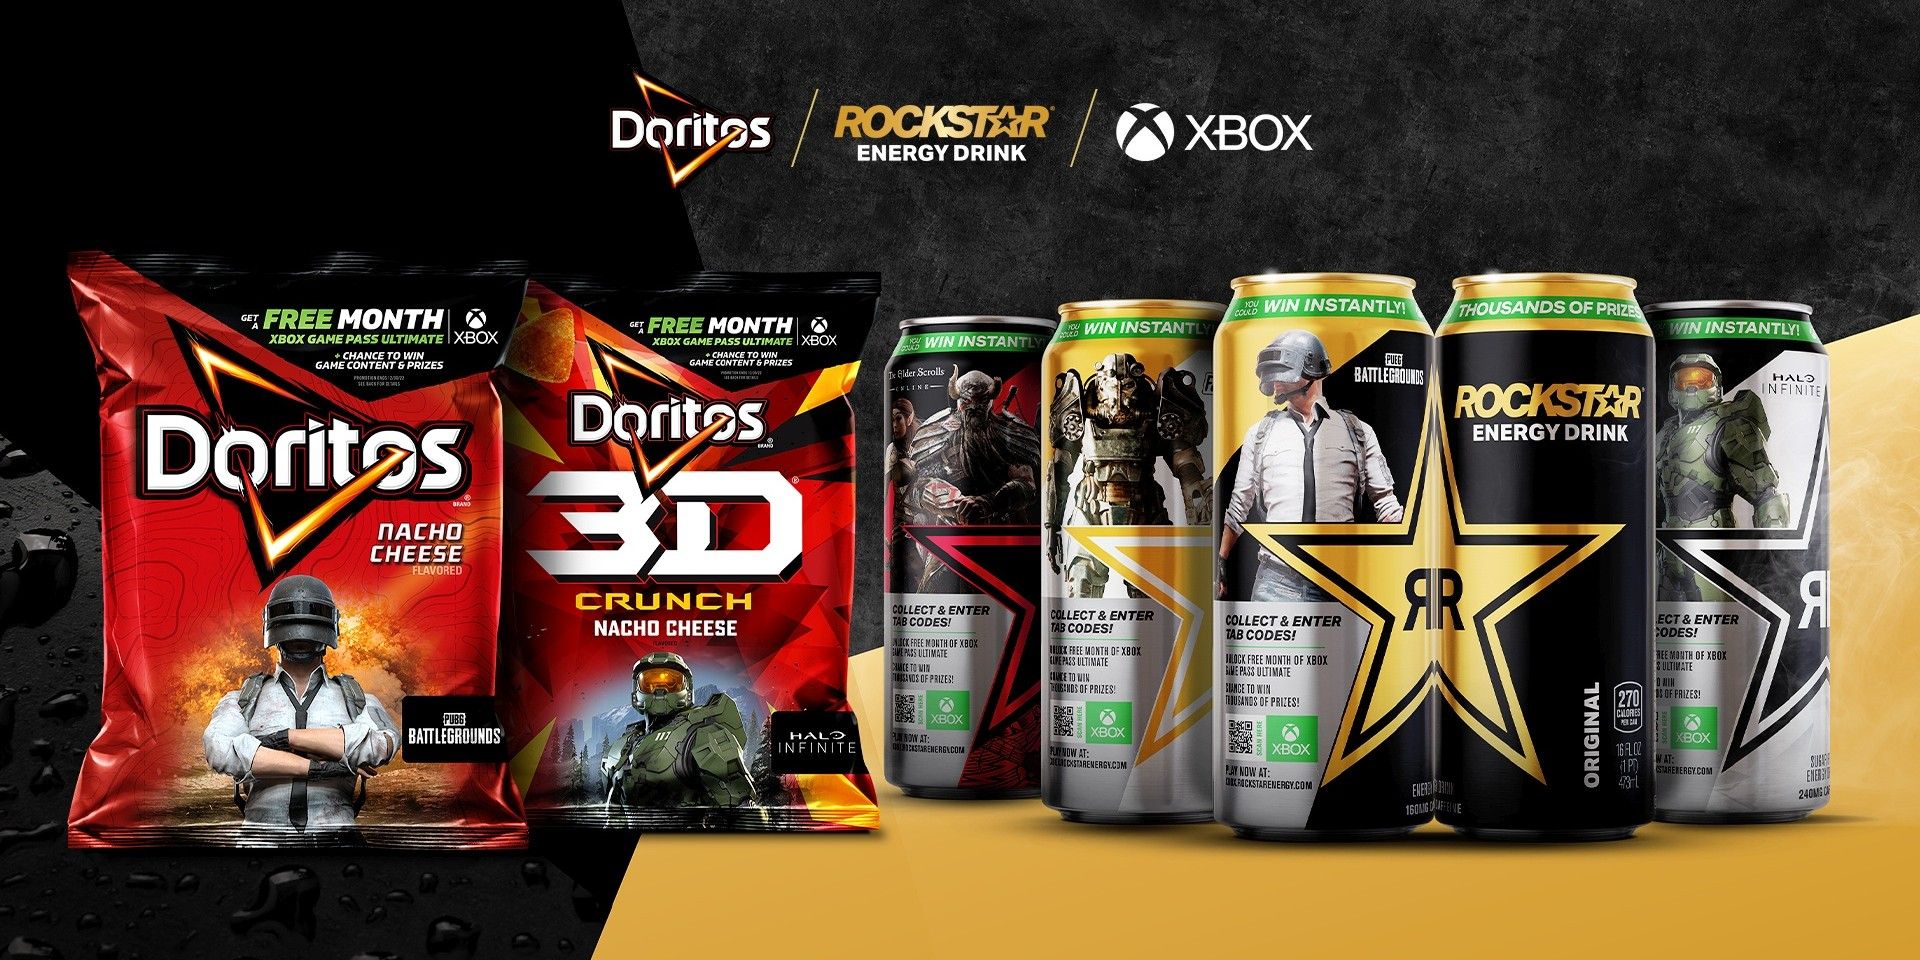 Doritos Xbox and Rockstar combination promotion.